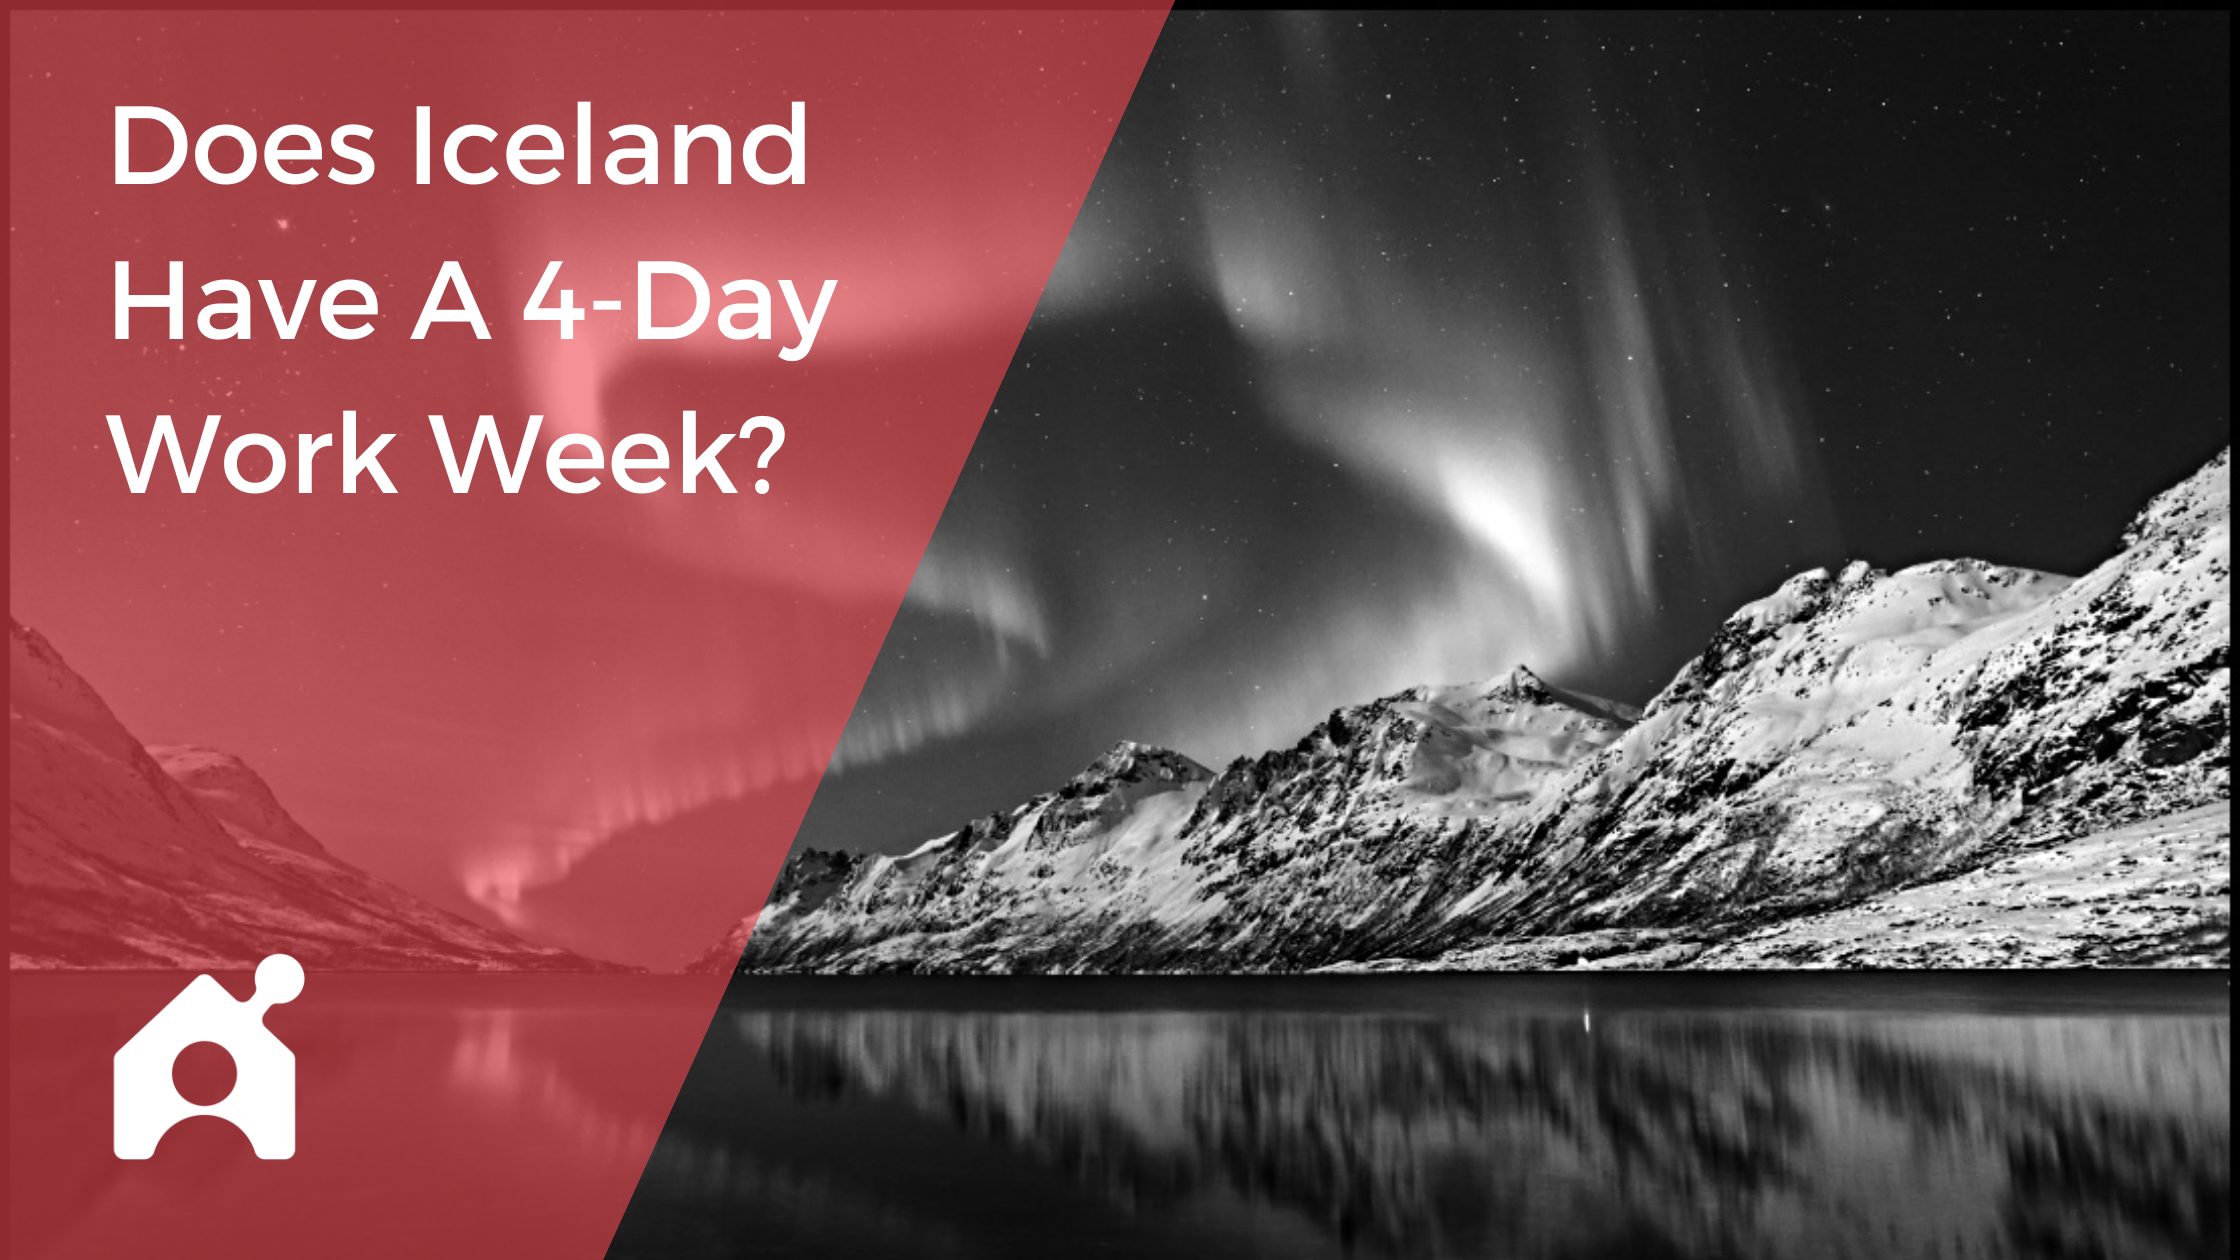 Iceland's 4 day work week